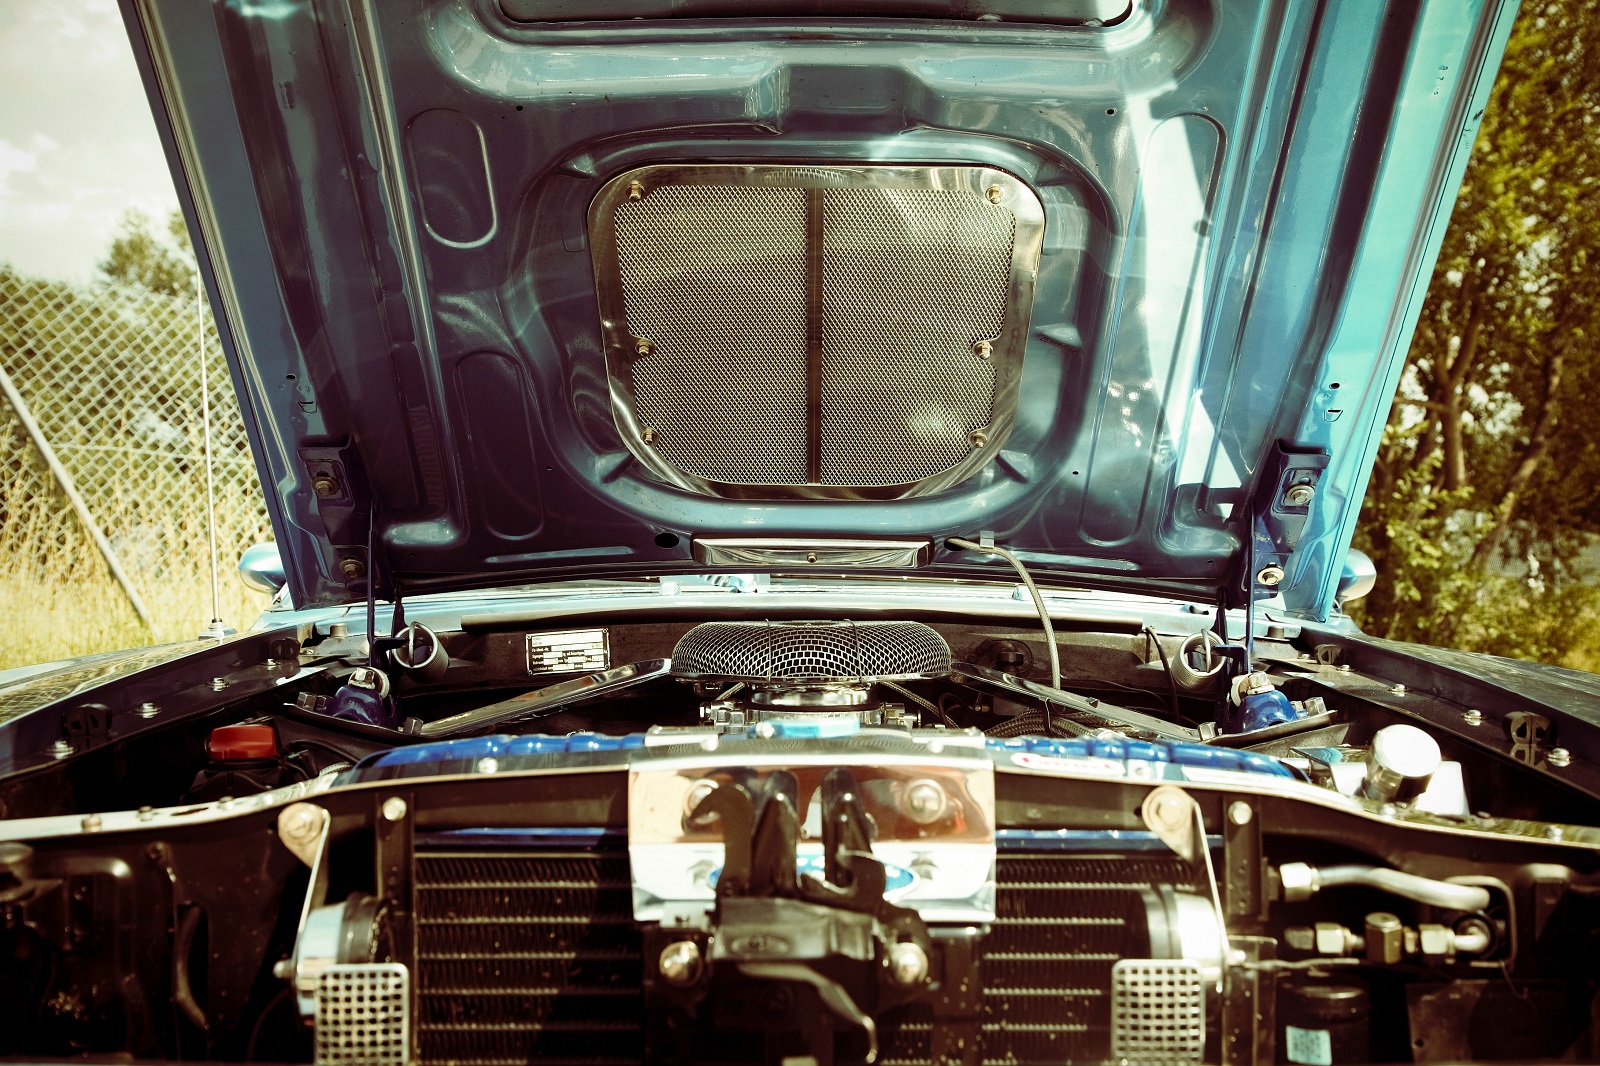 Automotor reinigen - Was muss man beachten? 